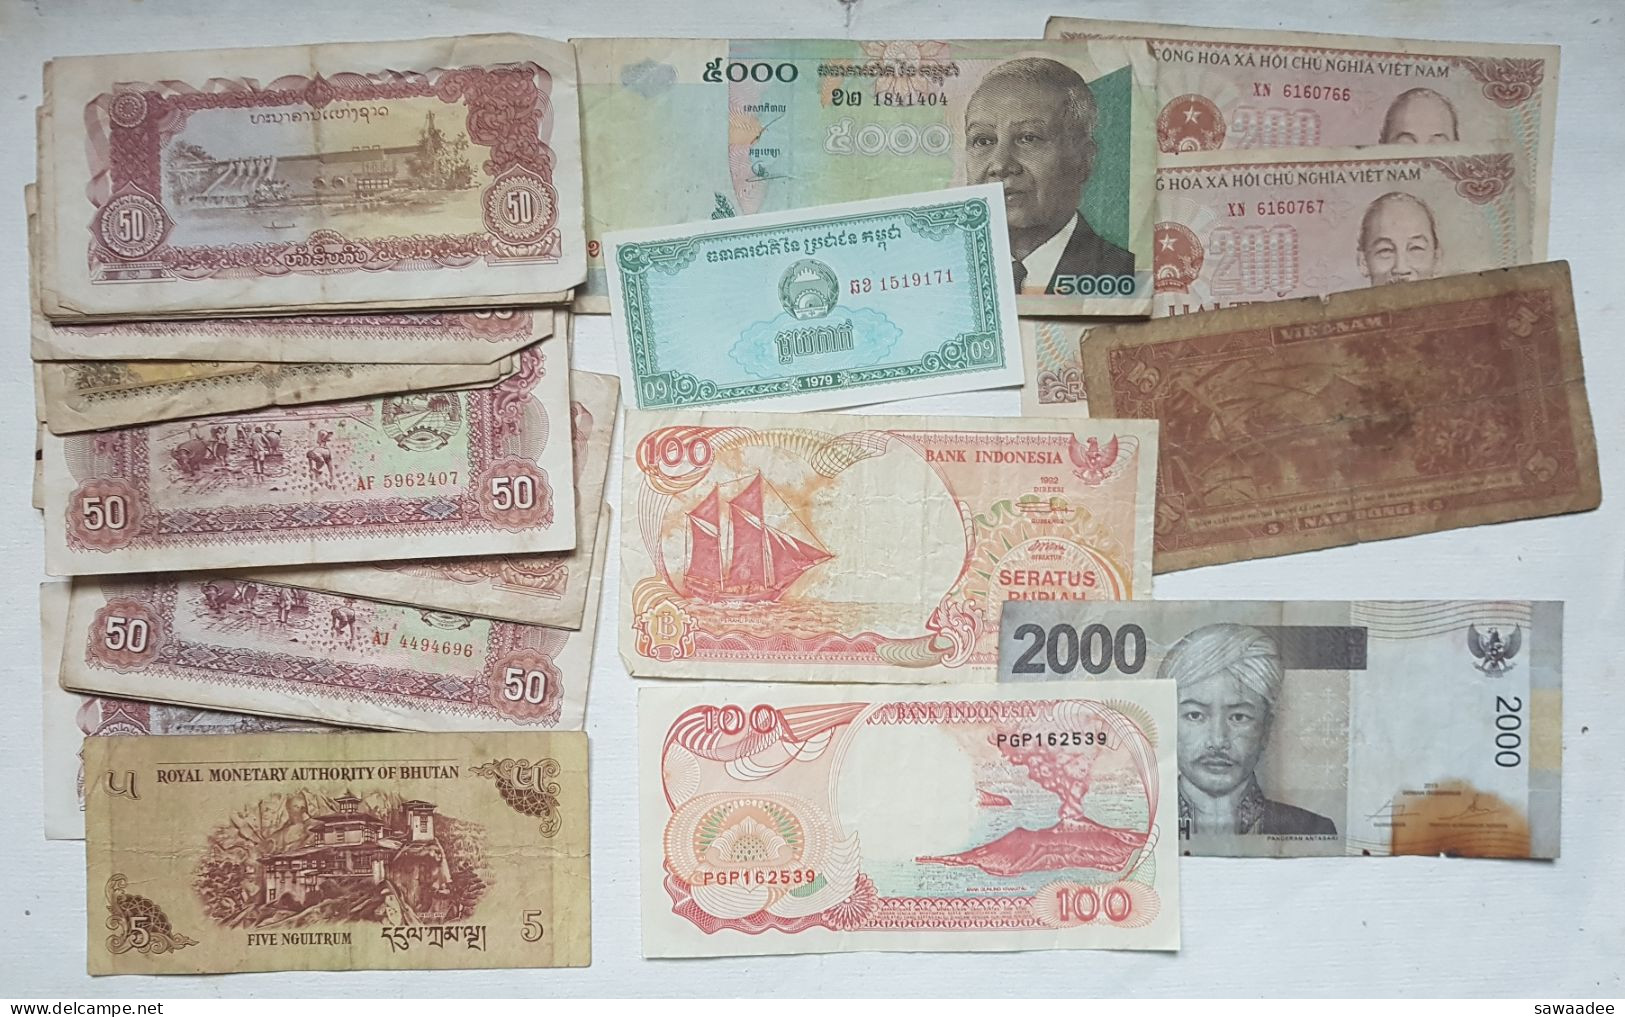 BILLETS ASIE - VRAC LOT DE 48 BILLETS -  LAOS, CHINE, JAPON, BOUTHAN, CAMBODGE, INDONESIE, VIETNAM ETC - A VOIR - Kilowaar - Bankbiljetten